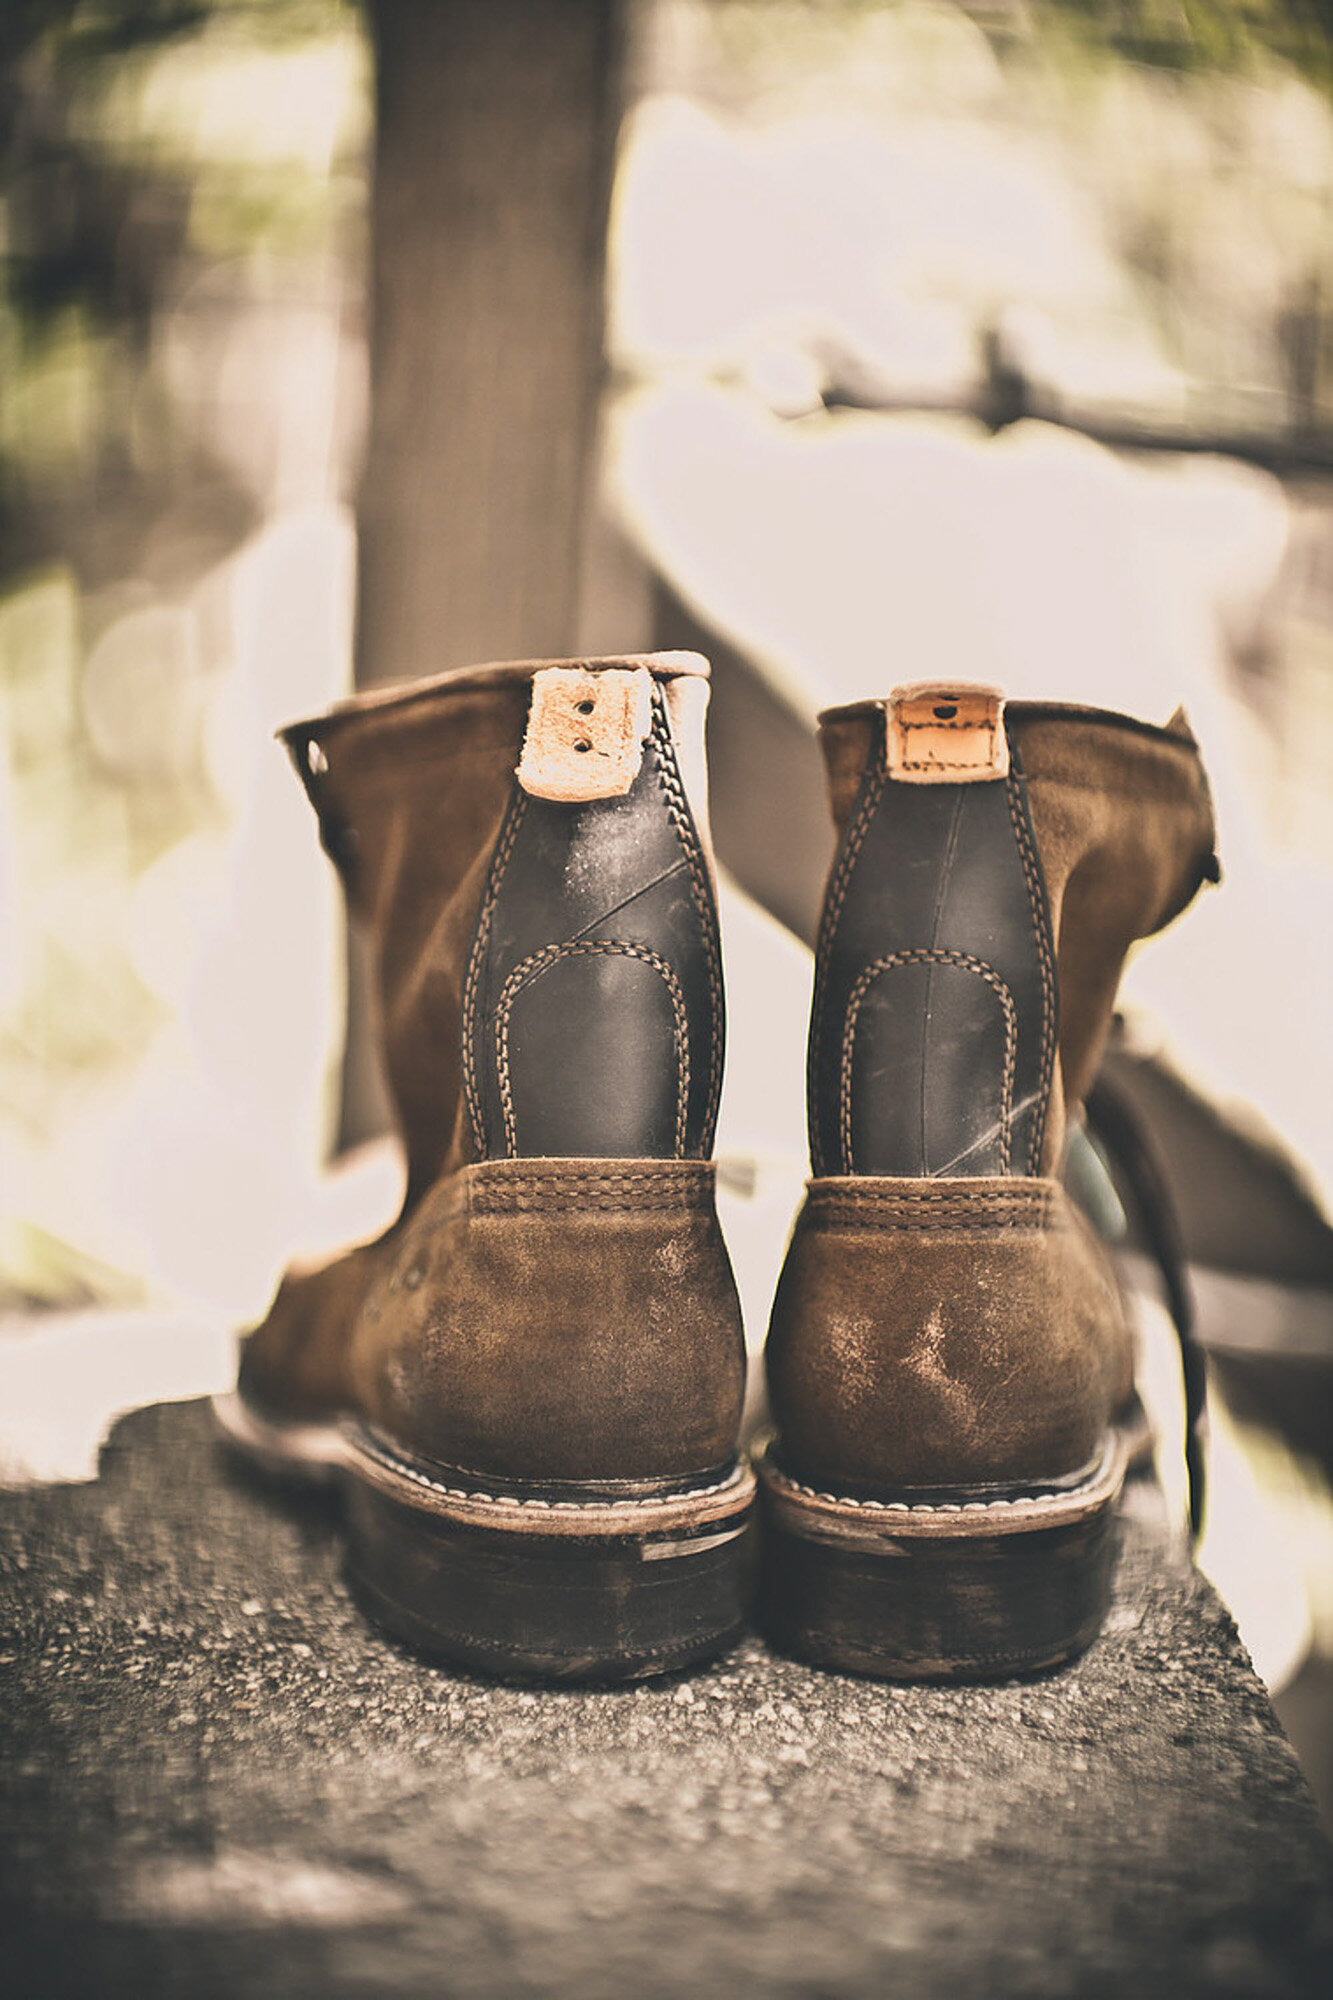 Footwear_by_Matt_Beard_Photography-17.jpg